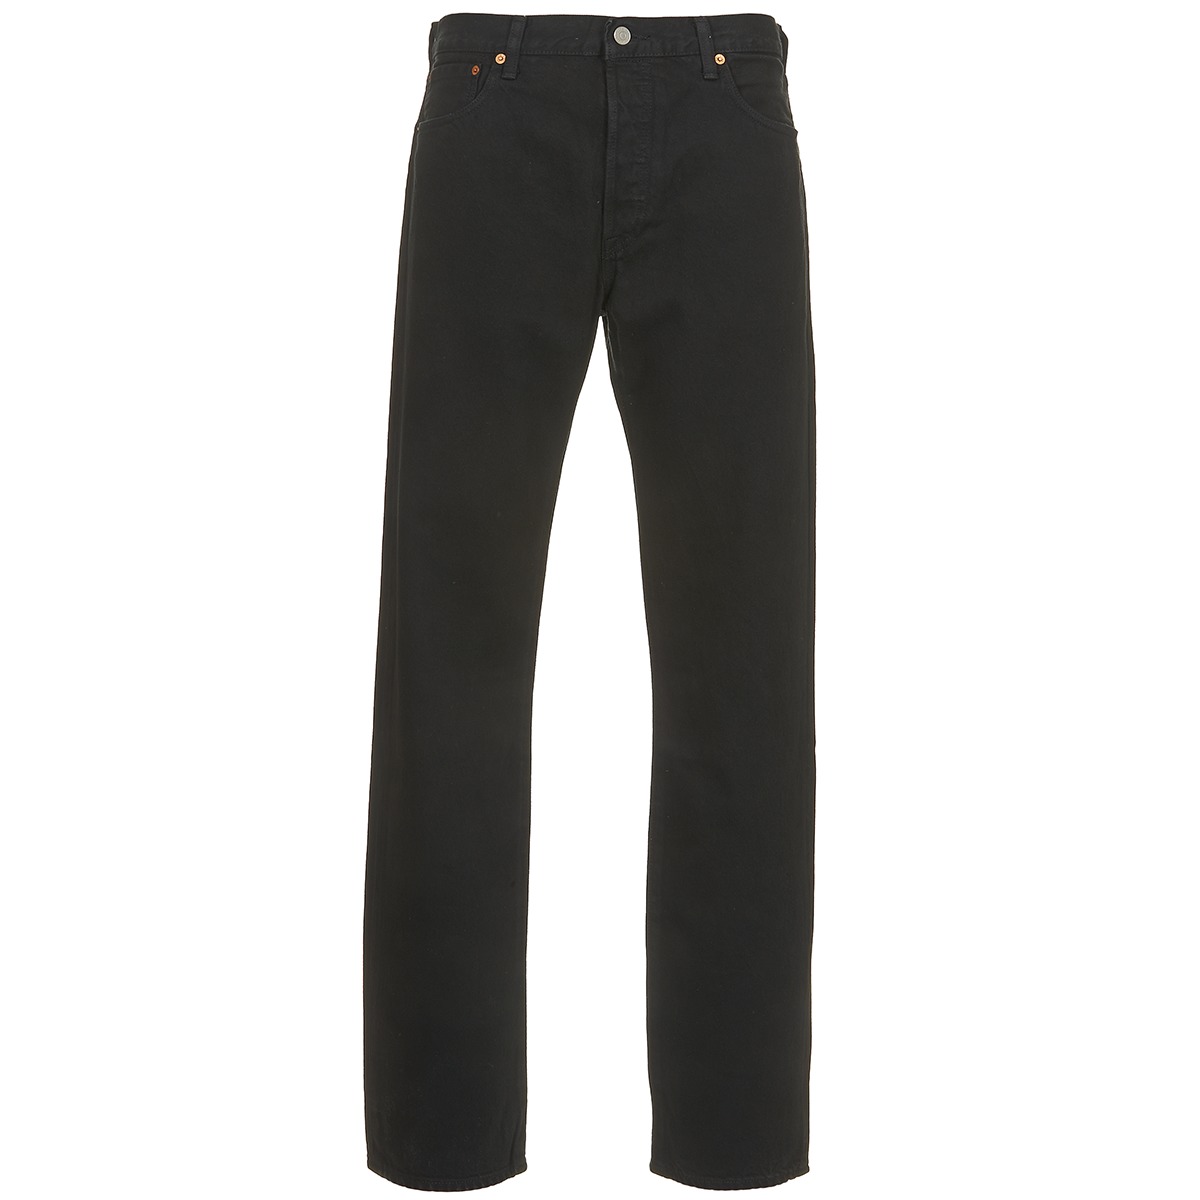 Levi's - 501 Jeans Original Fit Black 0165 - W 36 - L 34 - Regular-fit